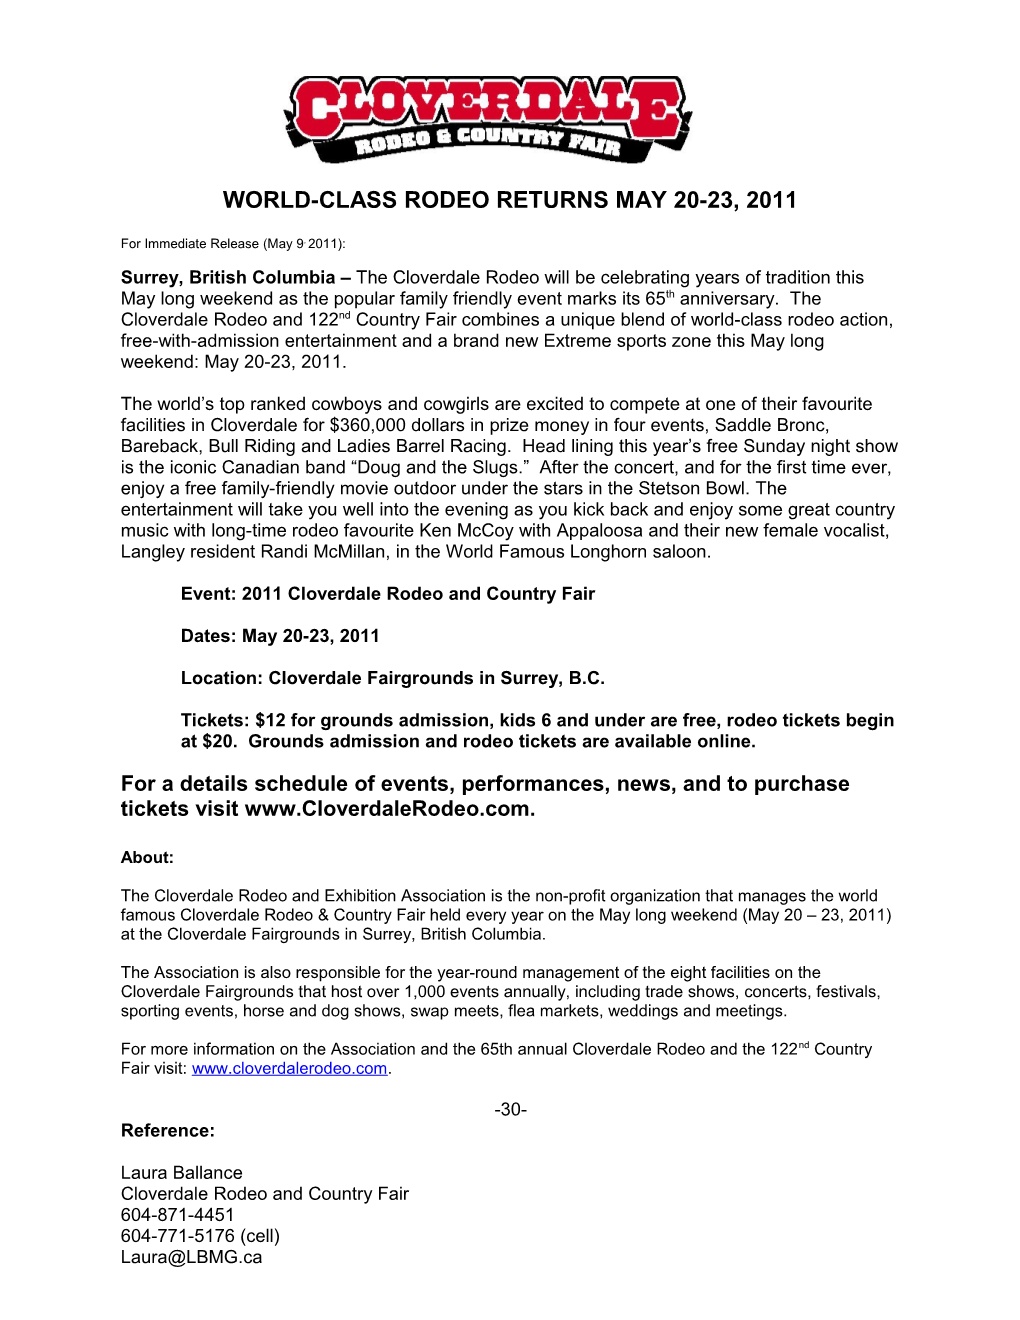 World-Class Rodeo Returns May 20-23, 2011